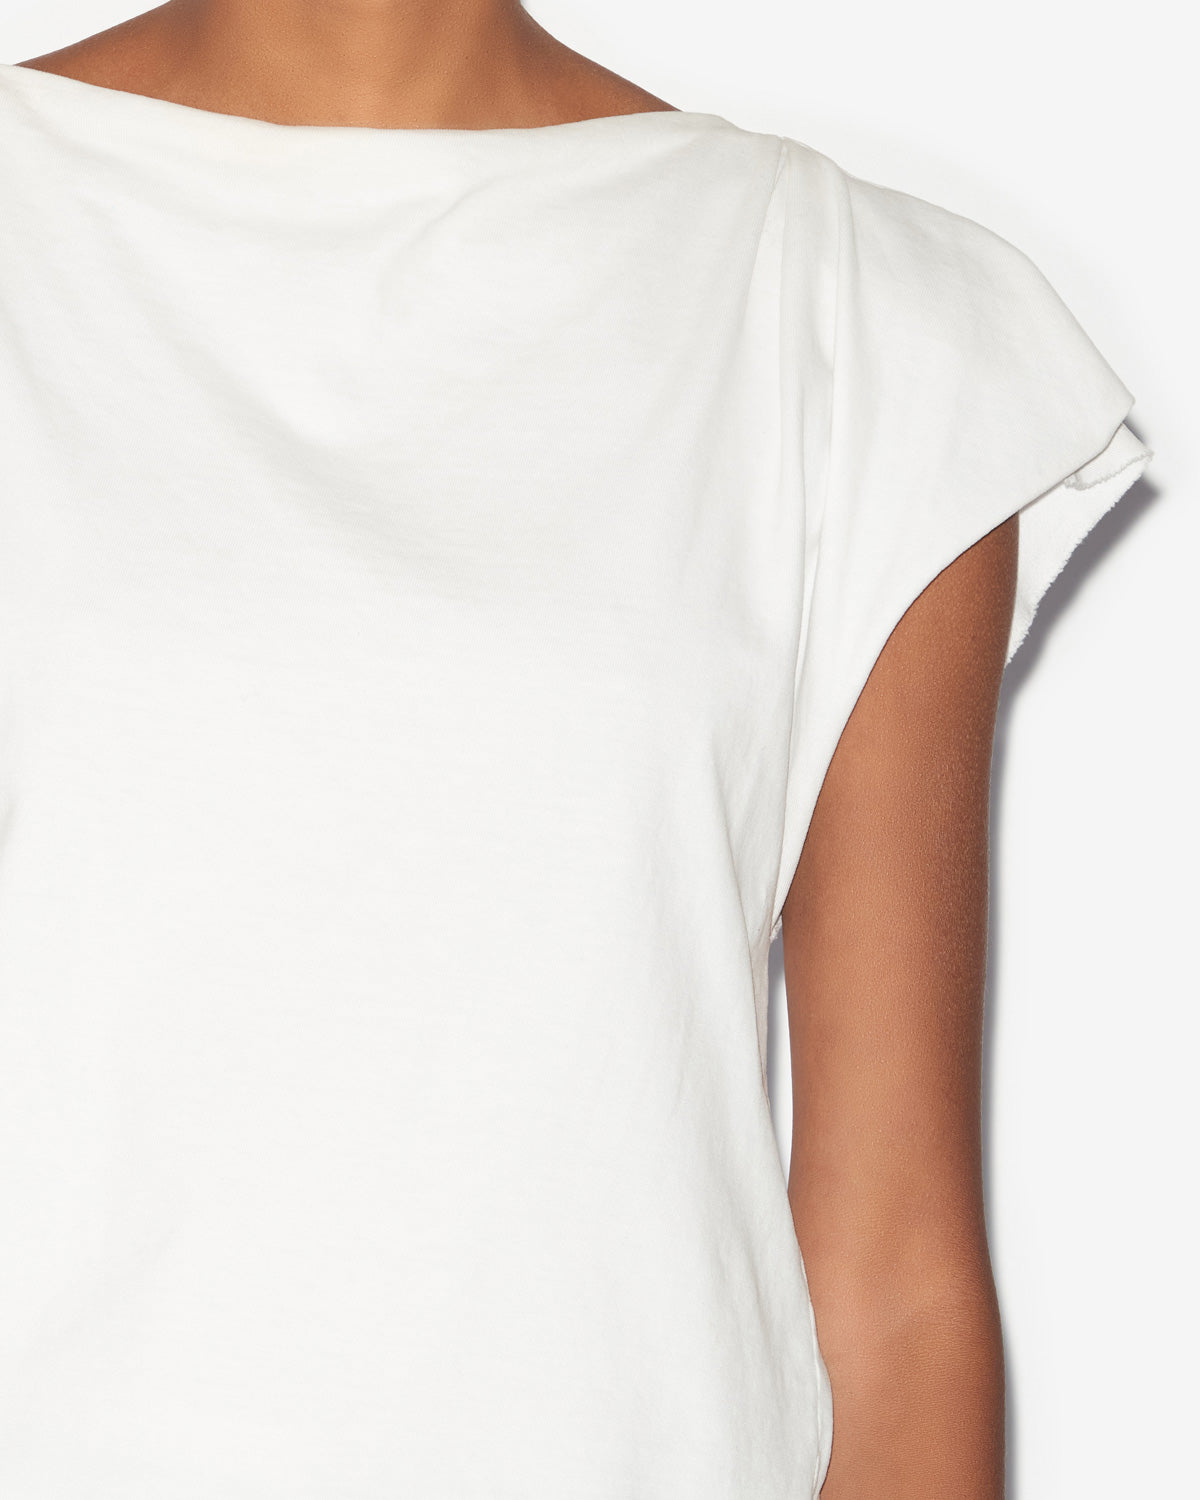 Sebani ティーシャツ Woman 白 3